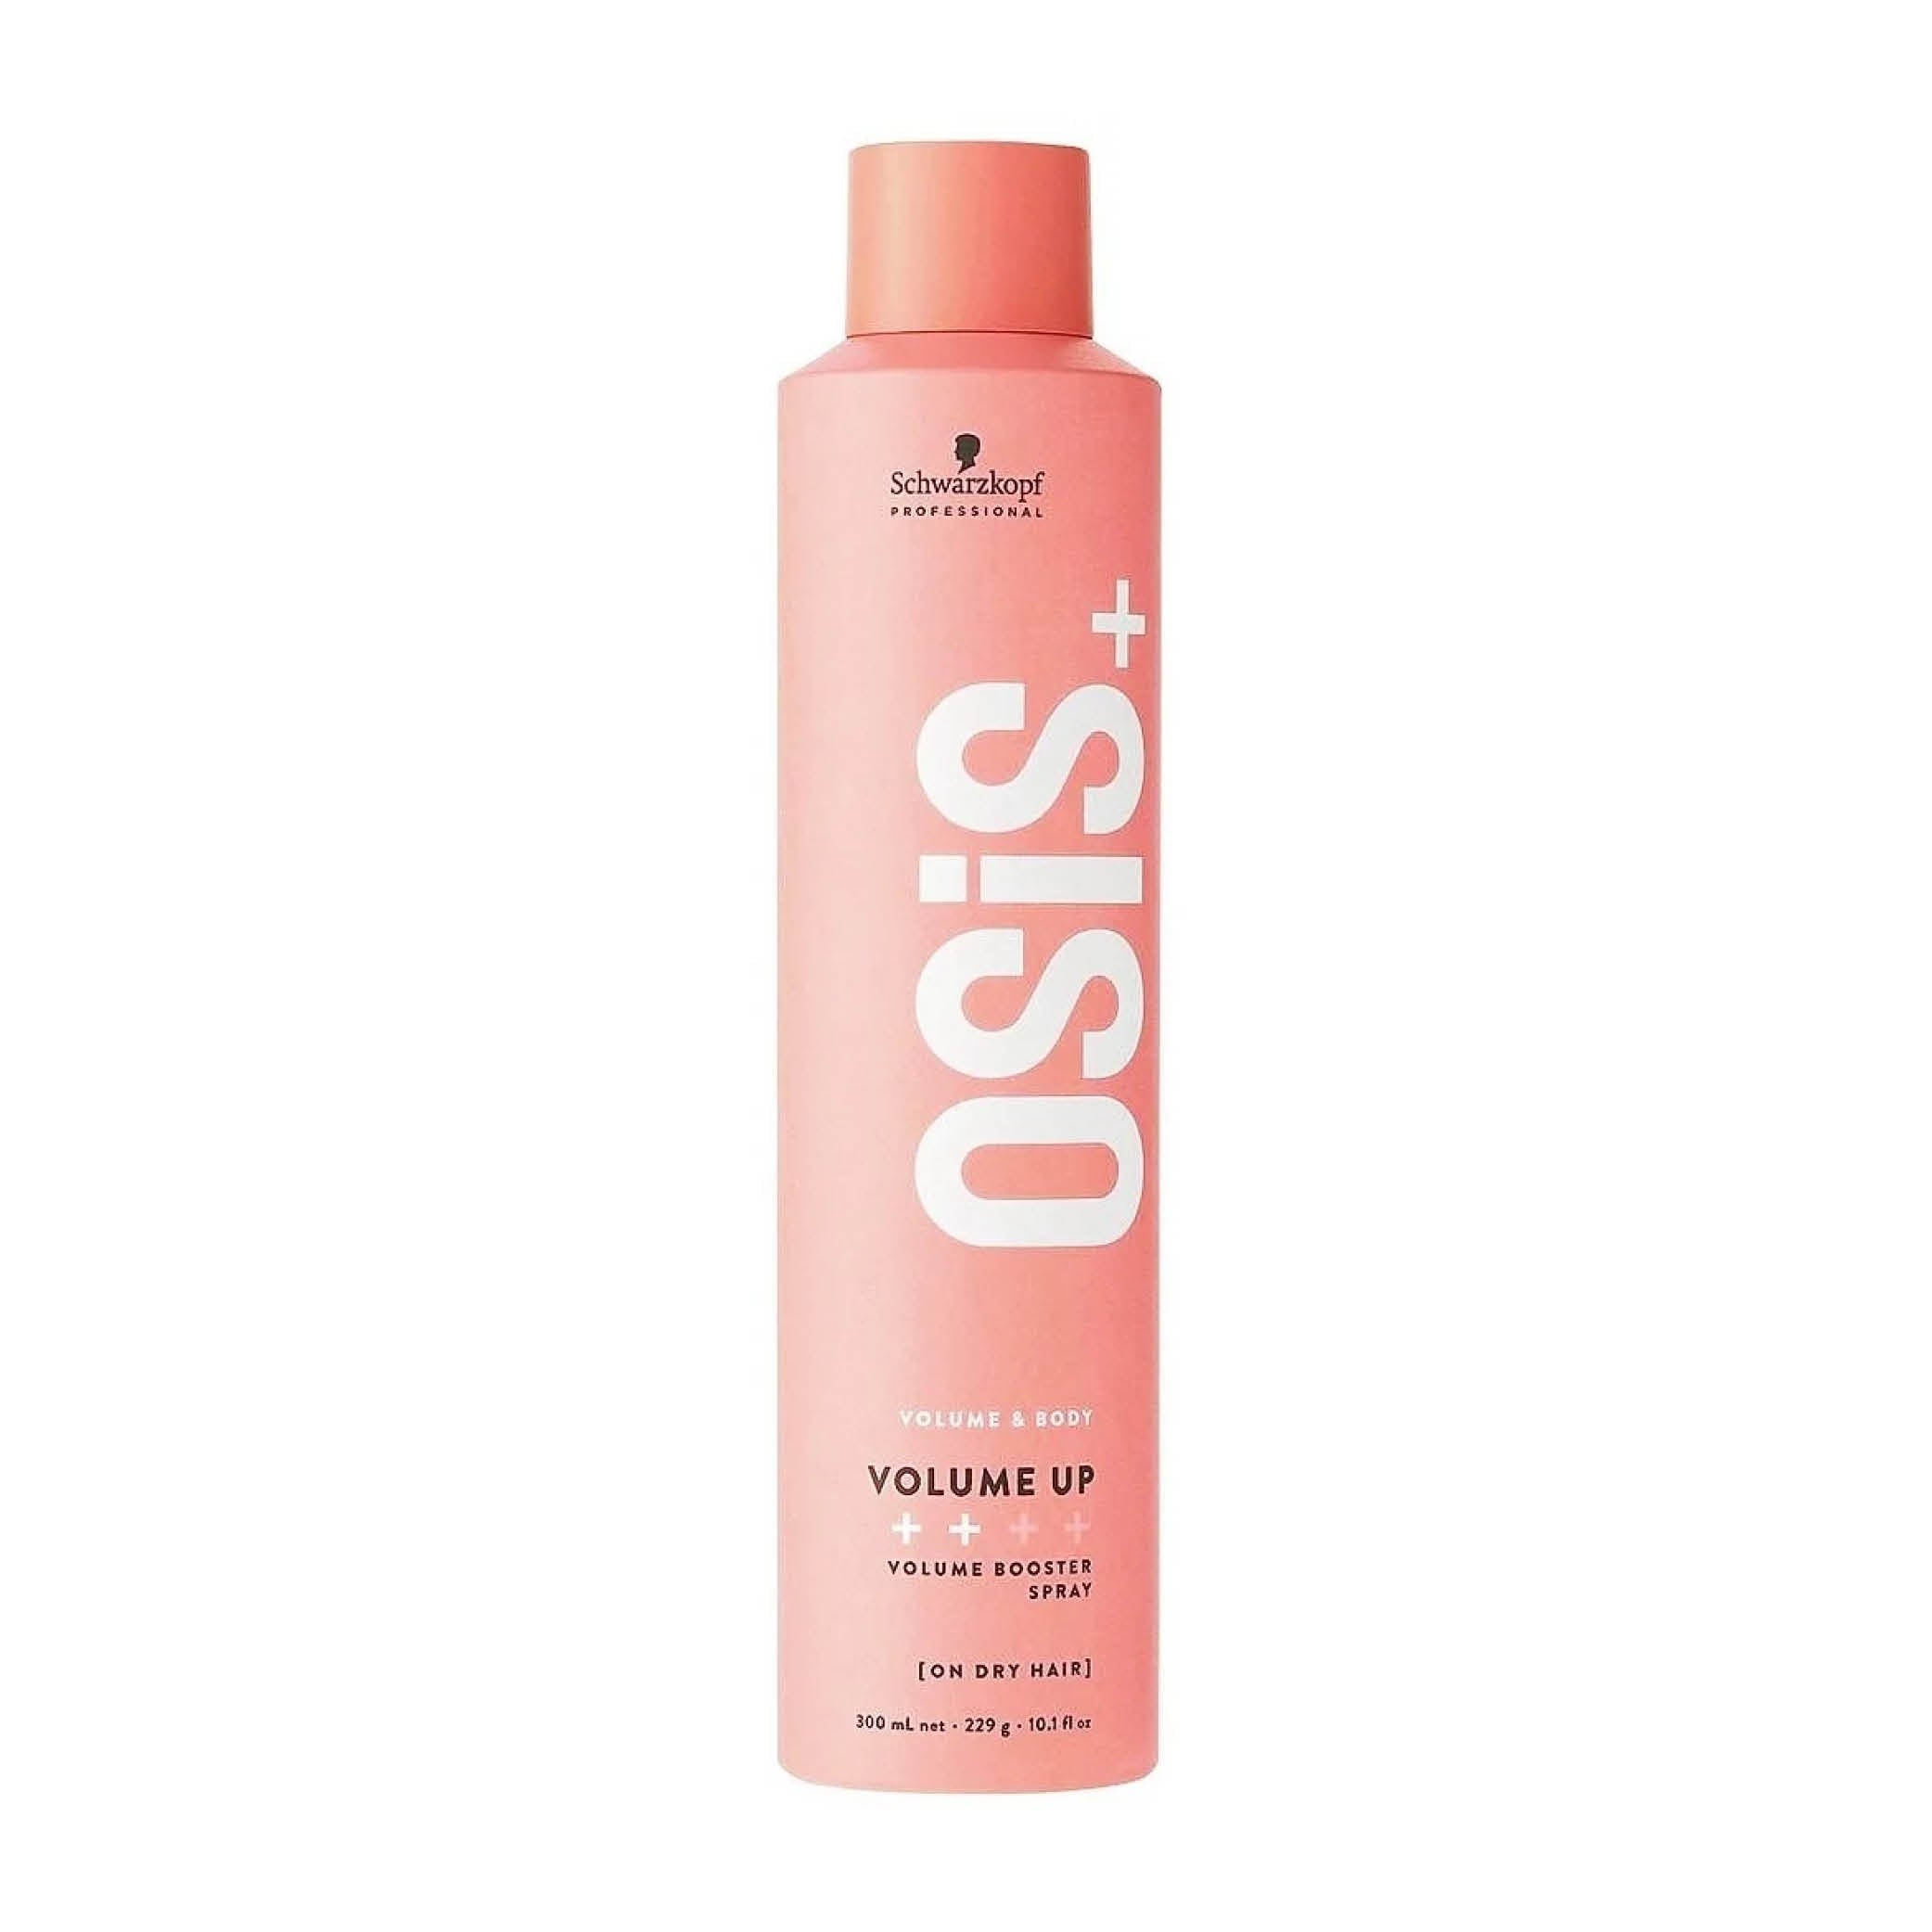 Osis+ Volume Up Volume Booster Spray